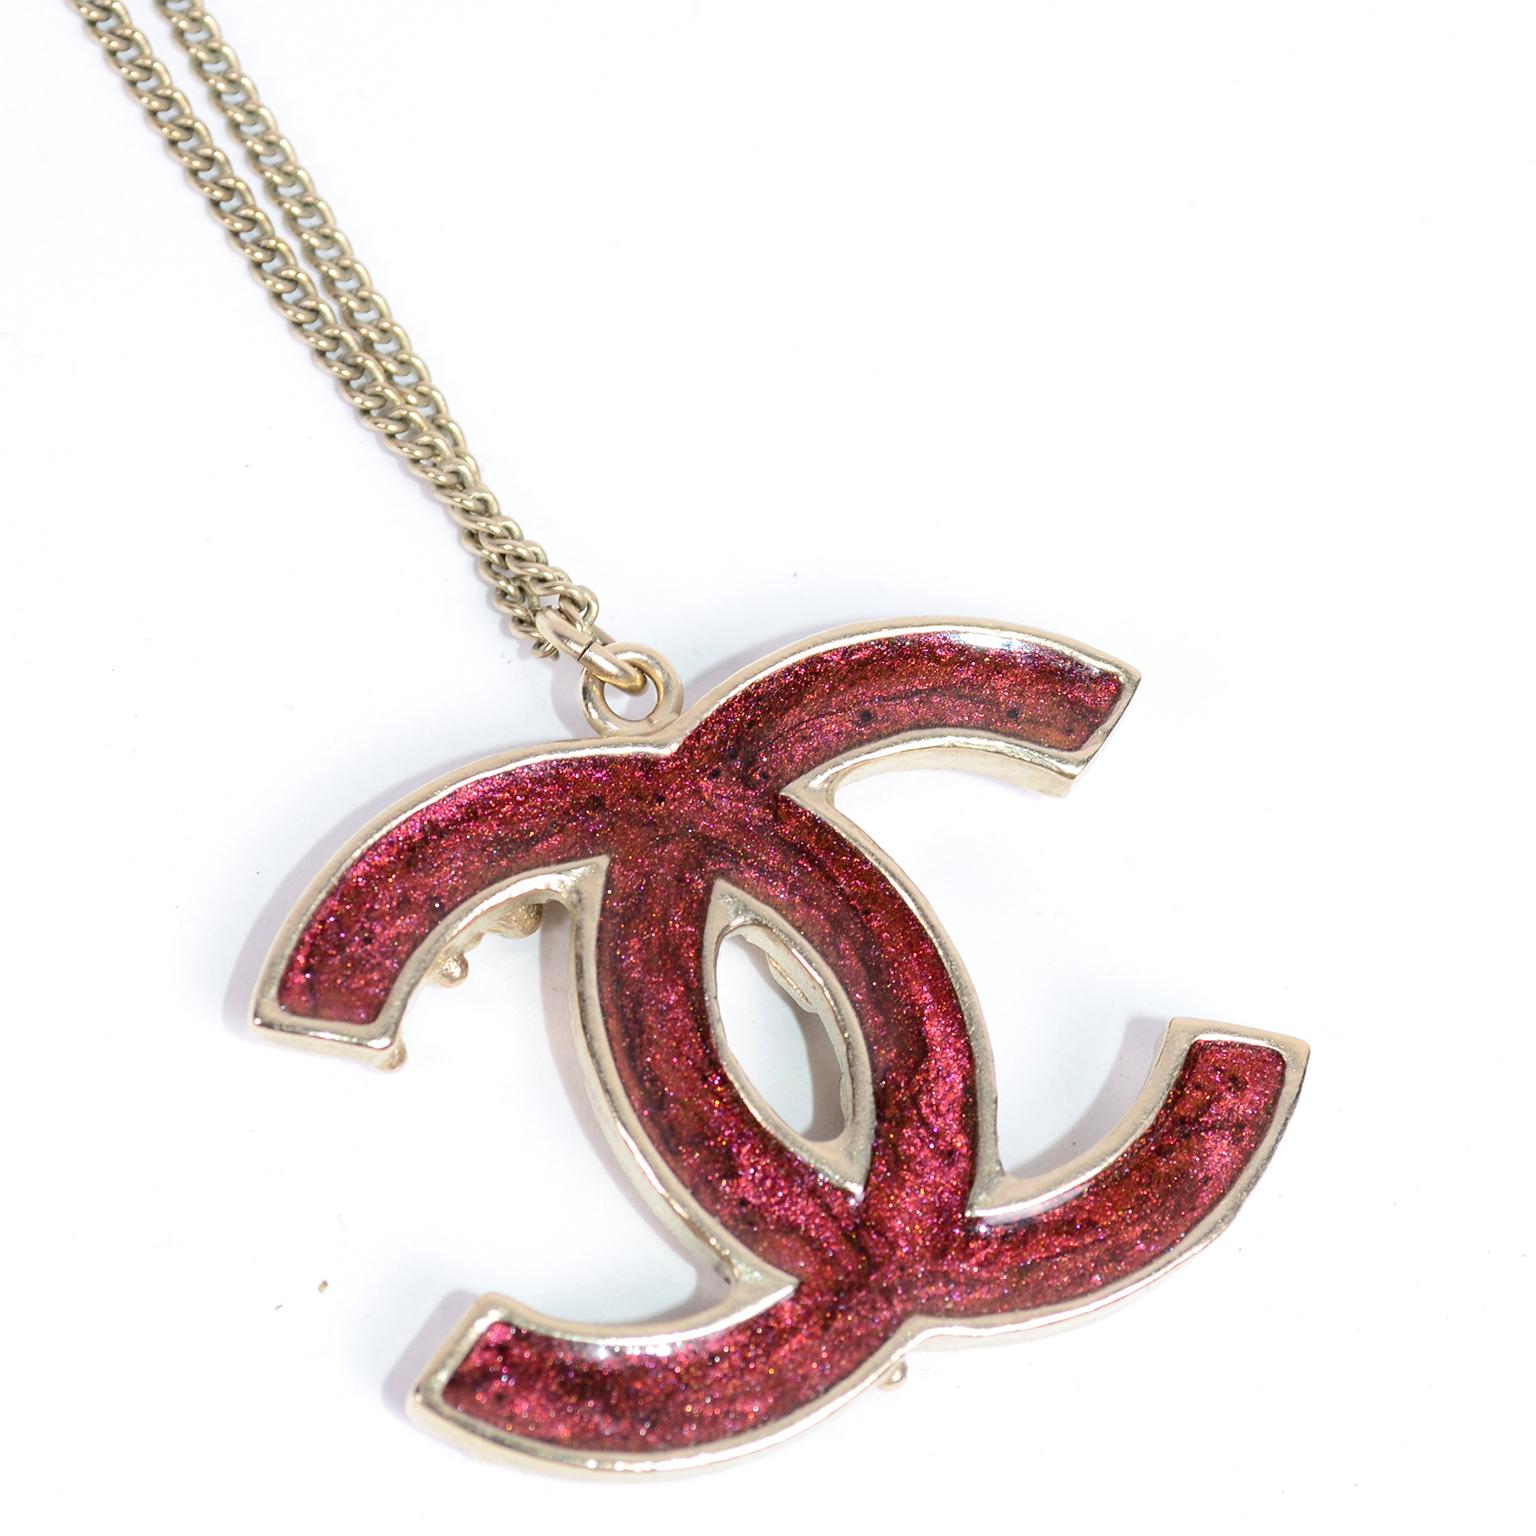 Women's Chanel Gripoix CC Monogram Pendant Necklace Authentic in Original Box w/ Tag